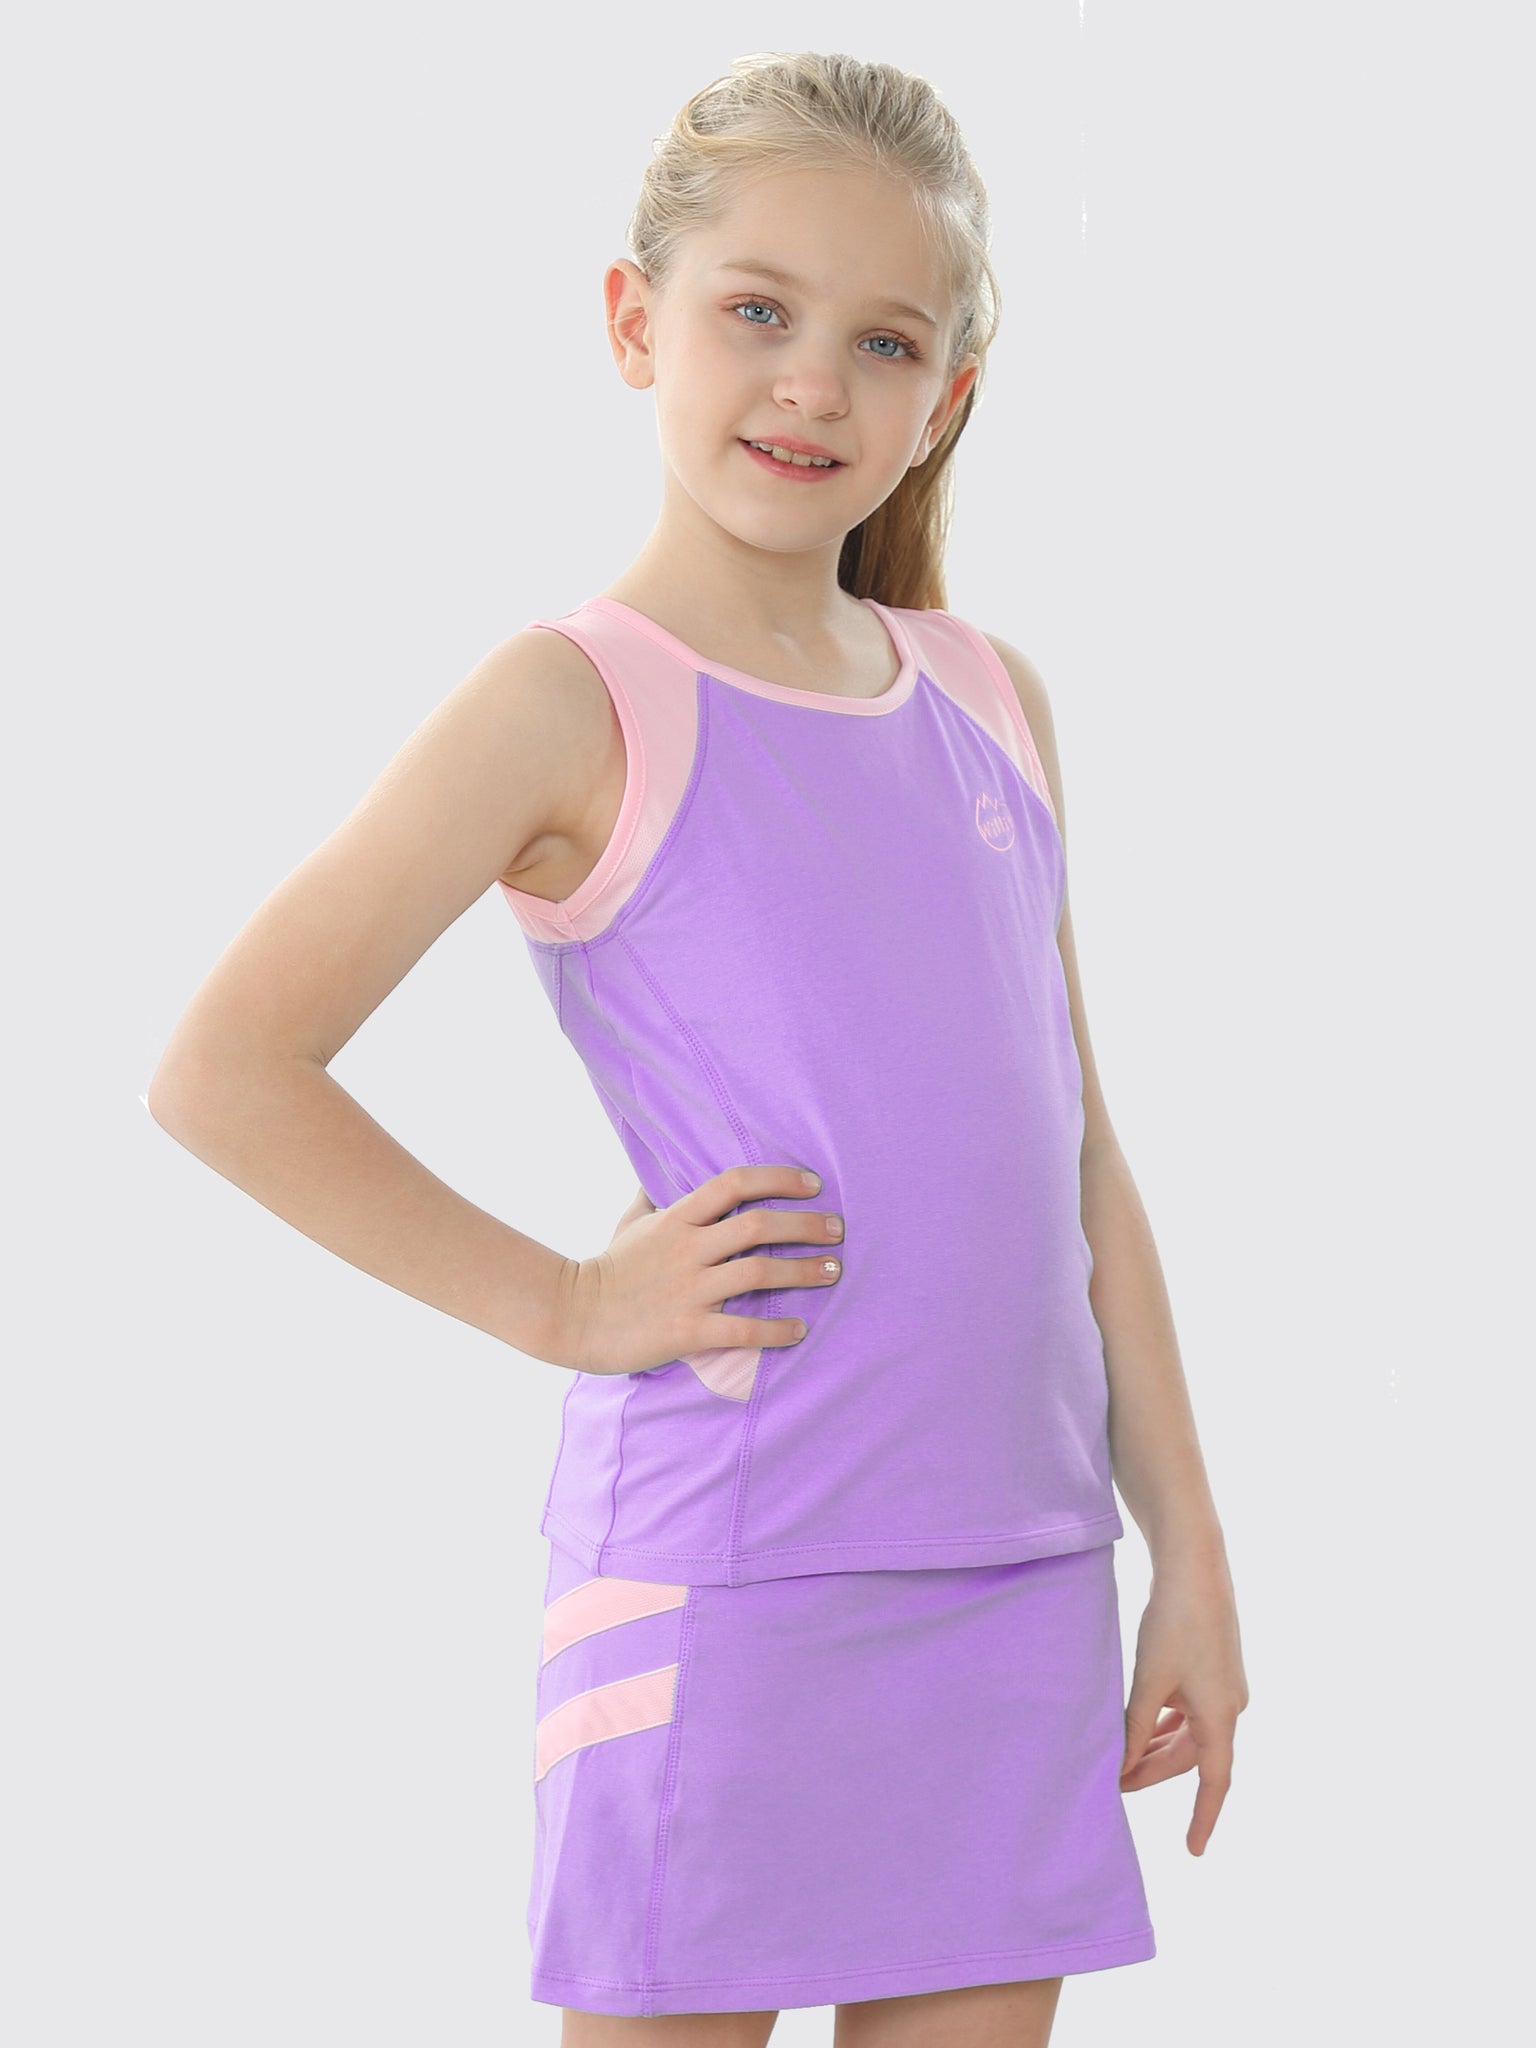 Willit Girls' Tennis Outfit_LightPurple_model3